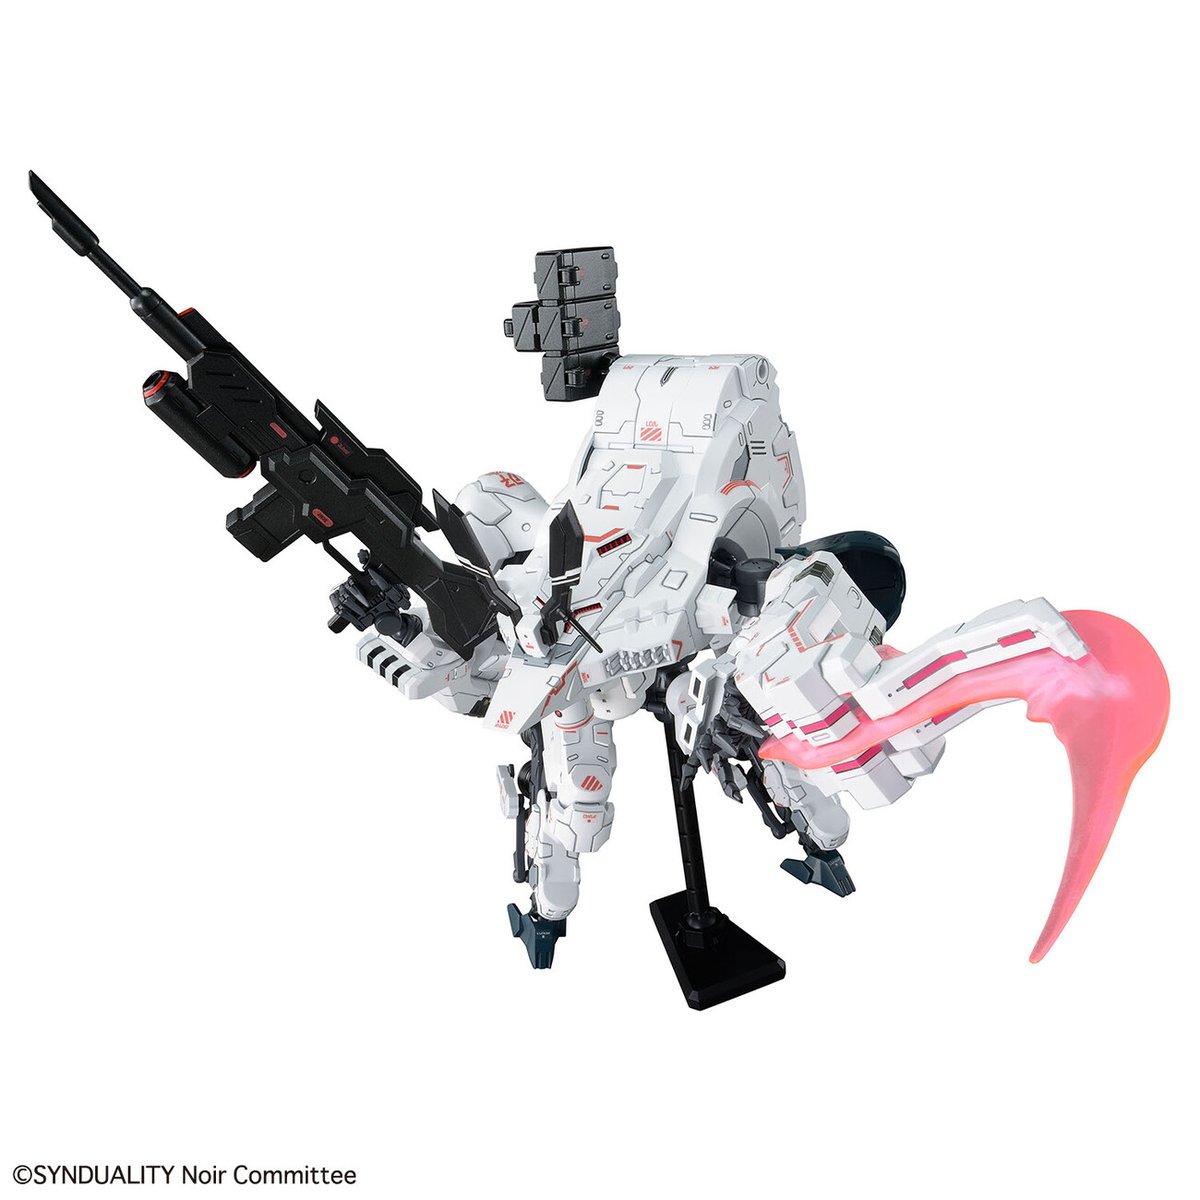 weapon robot no humans mecha gun holding weapon white background  illustration images